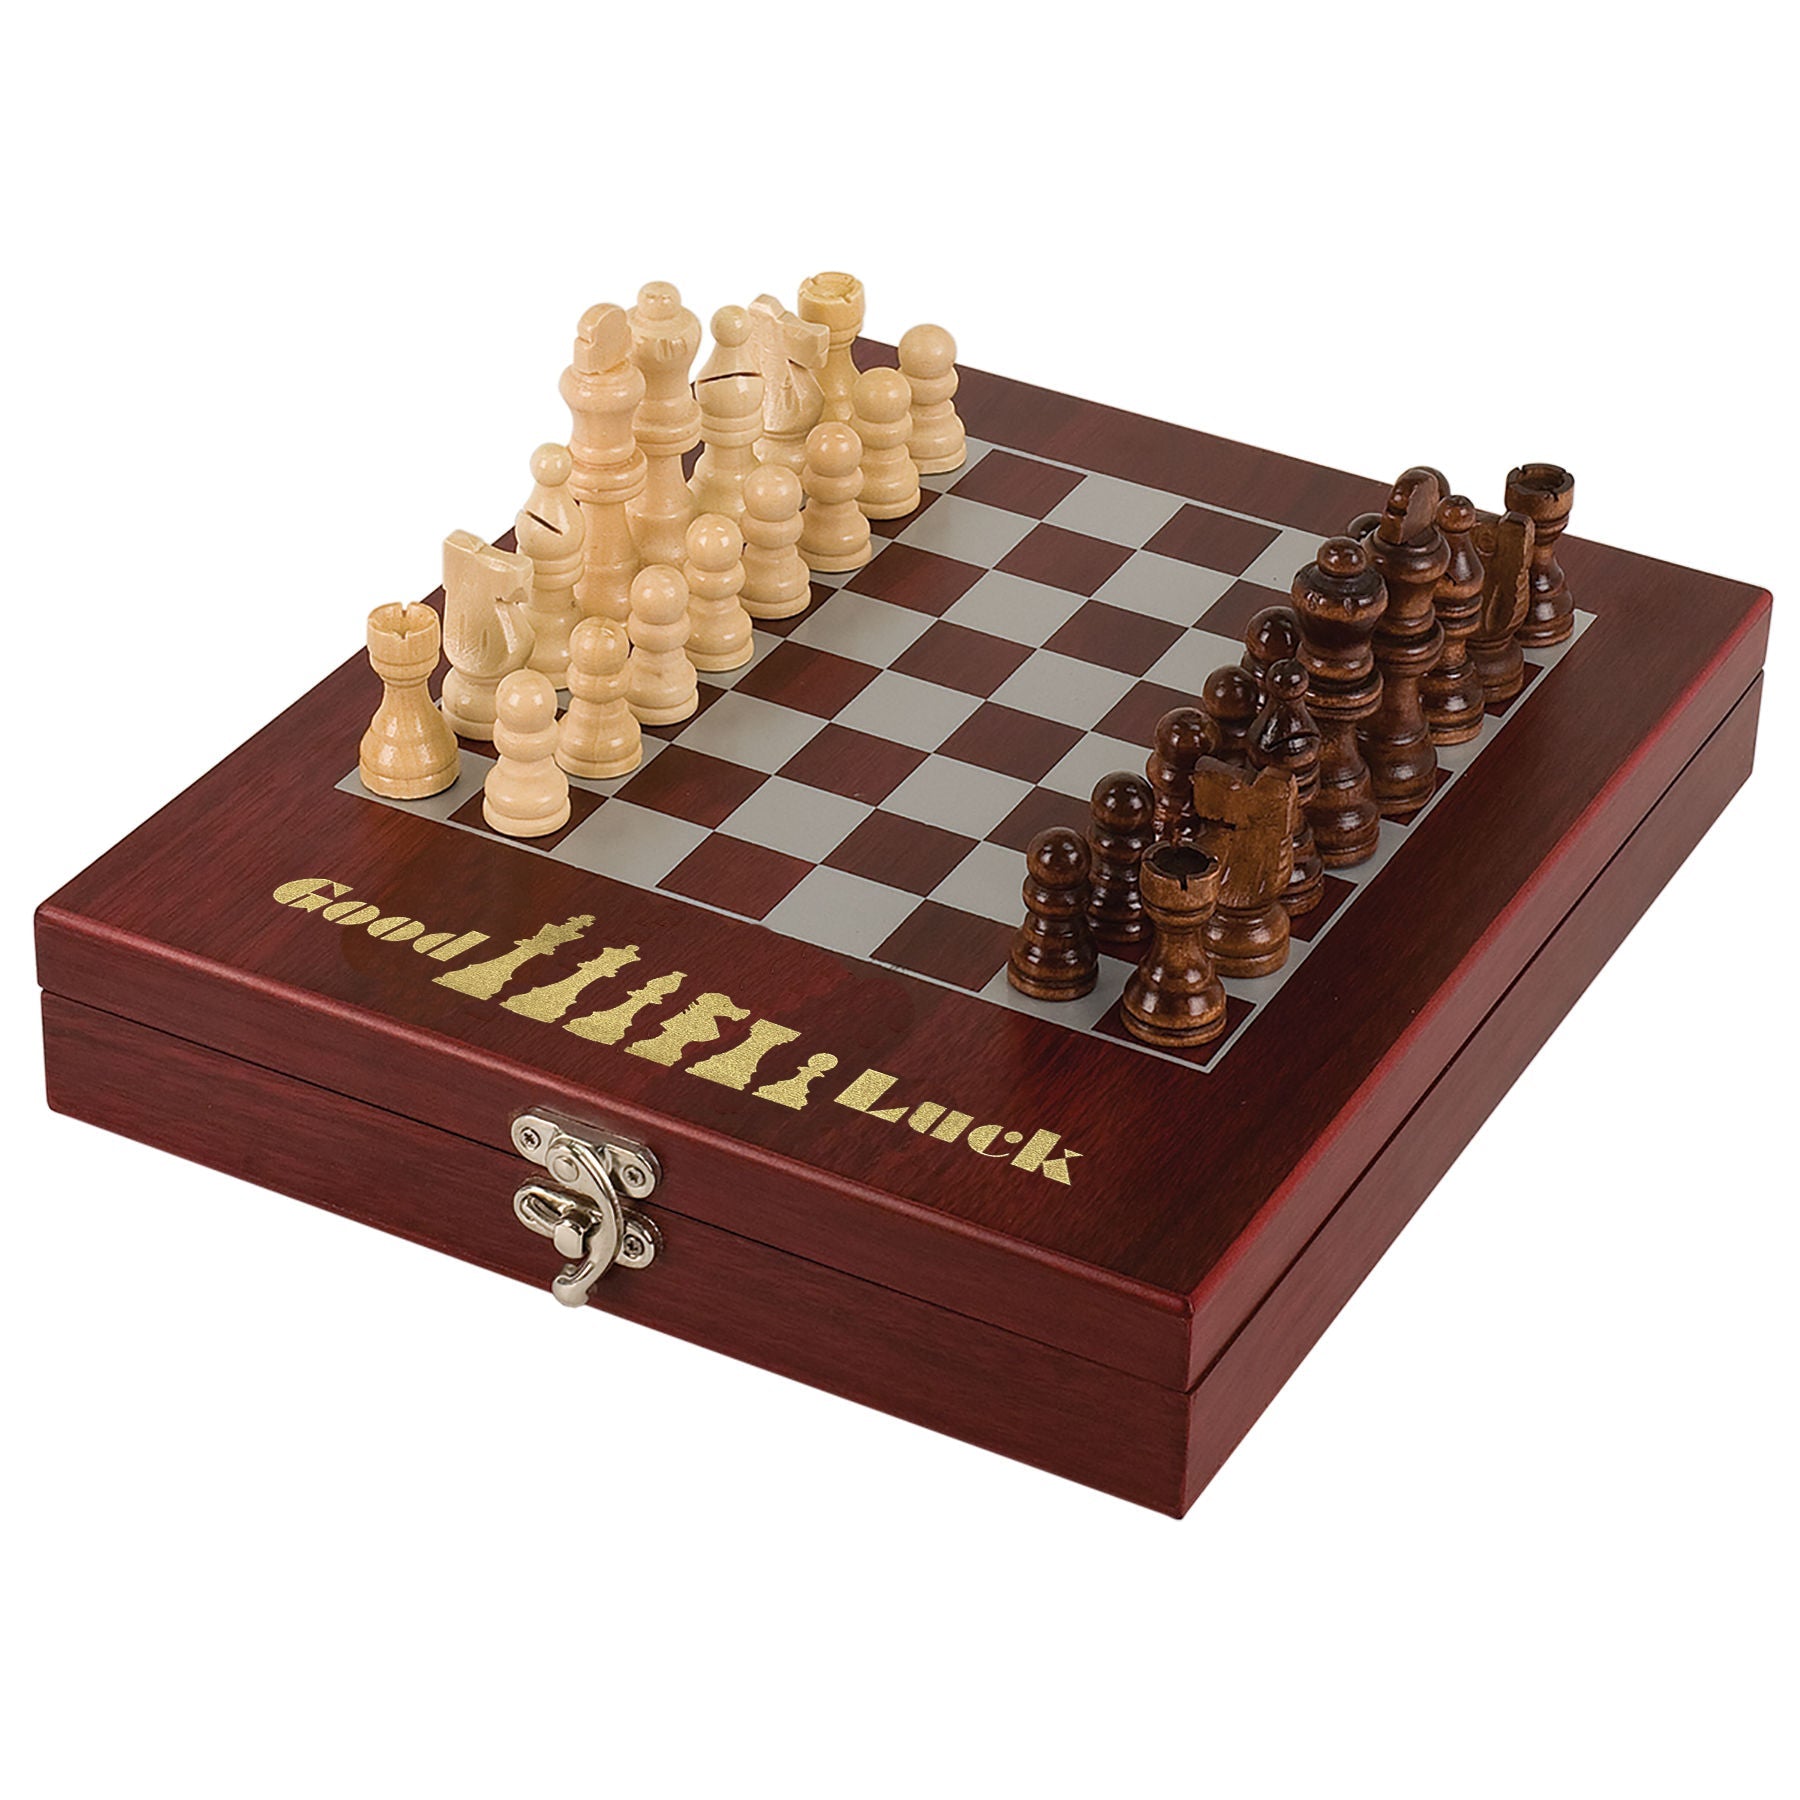 Personalized Chess Set Box Rosewood Finish Custom Gift for Birthday Wedding